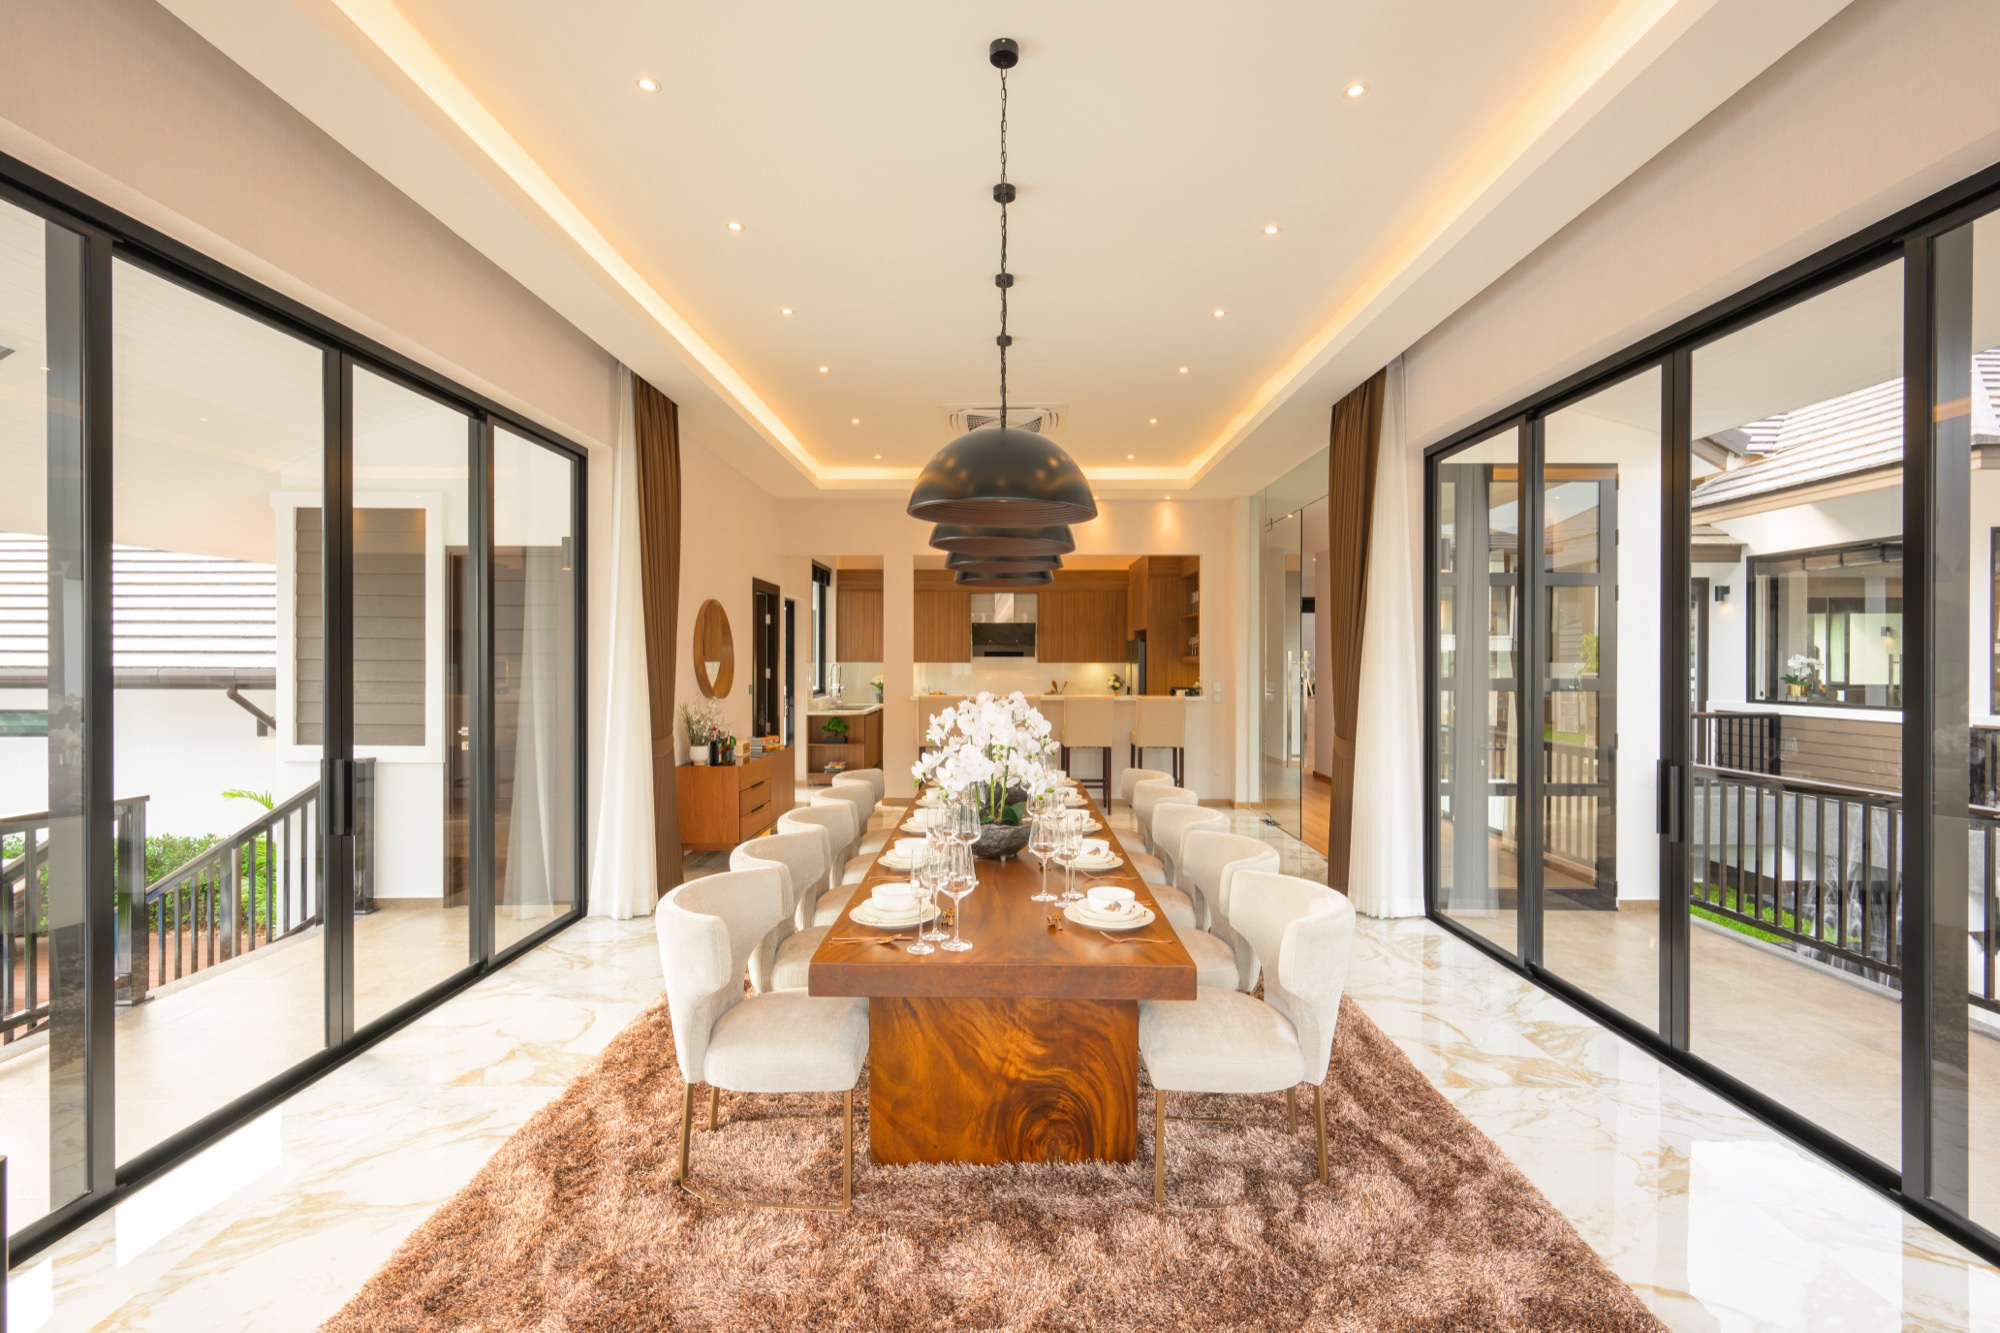 Review Luxury pool villa : Platinum Type13